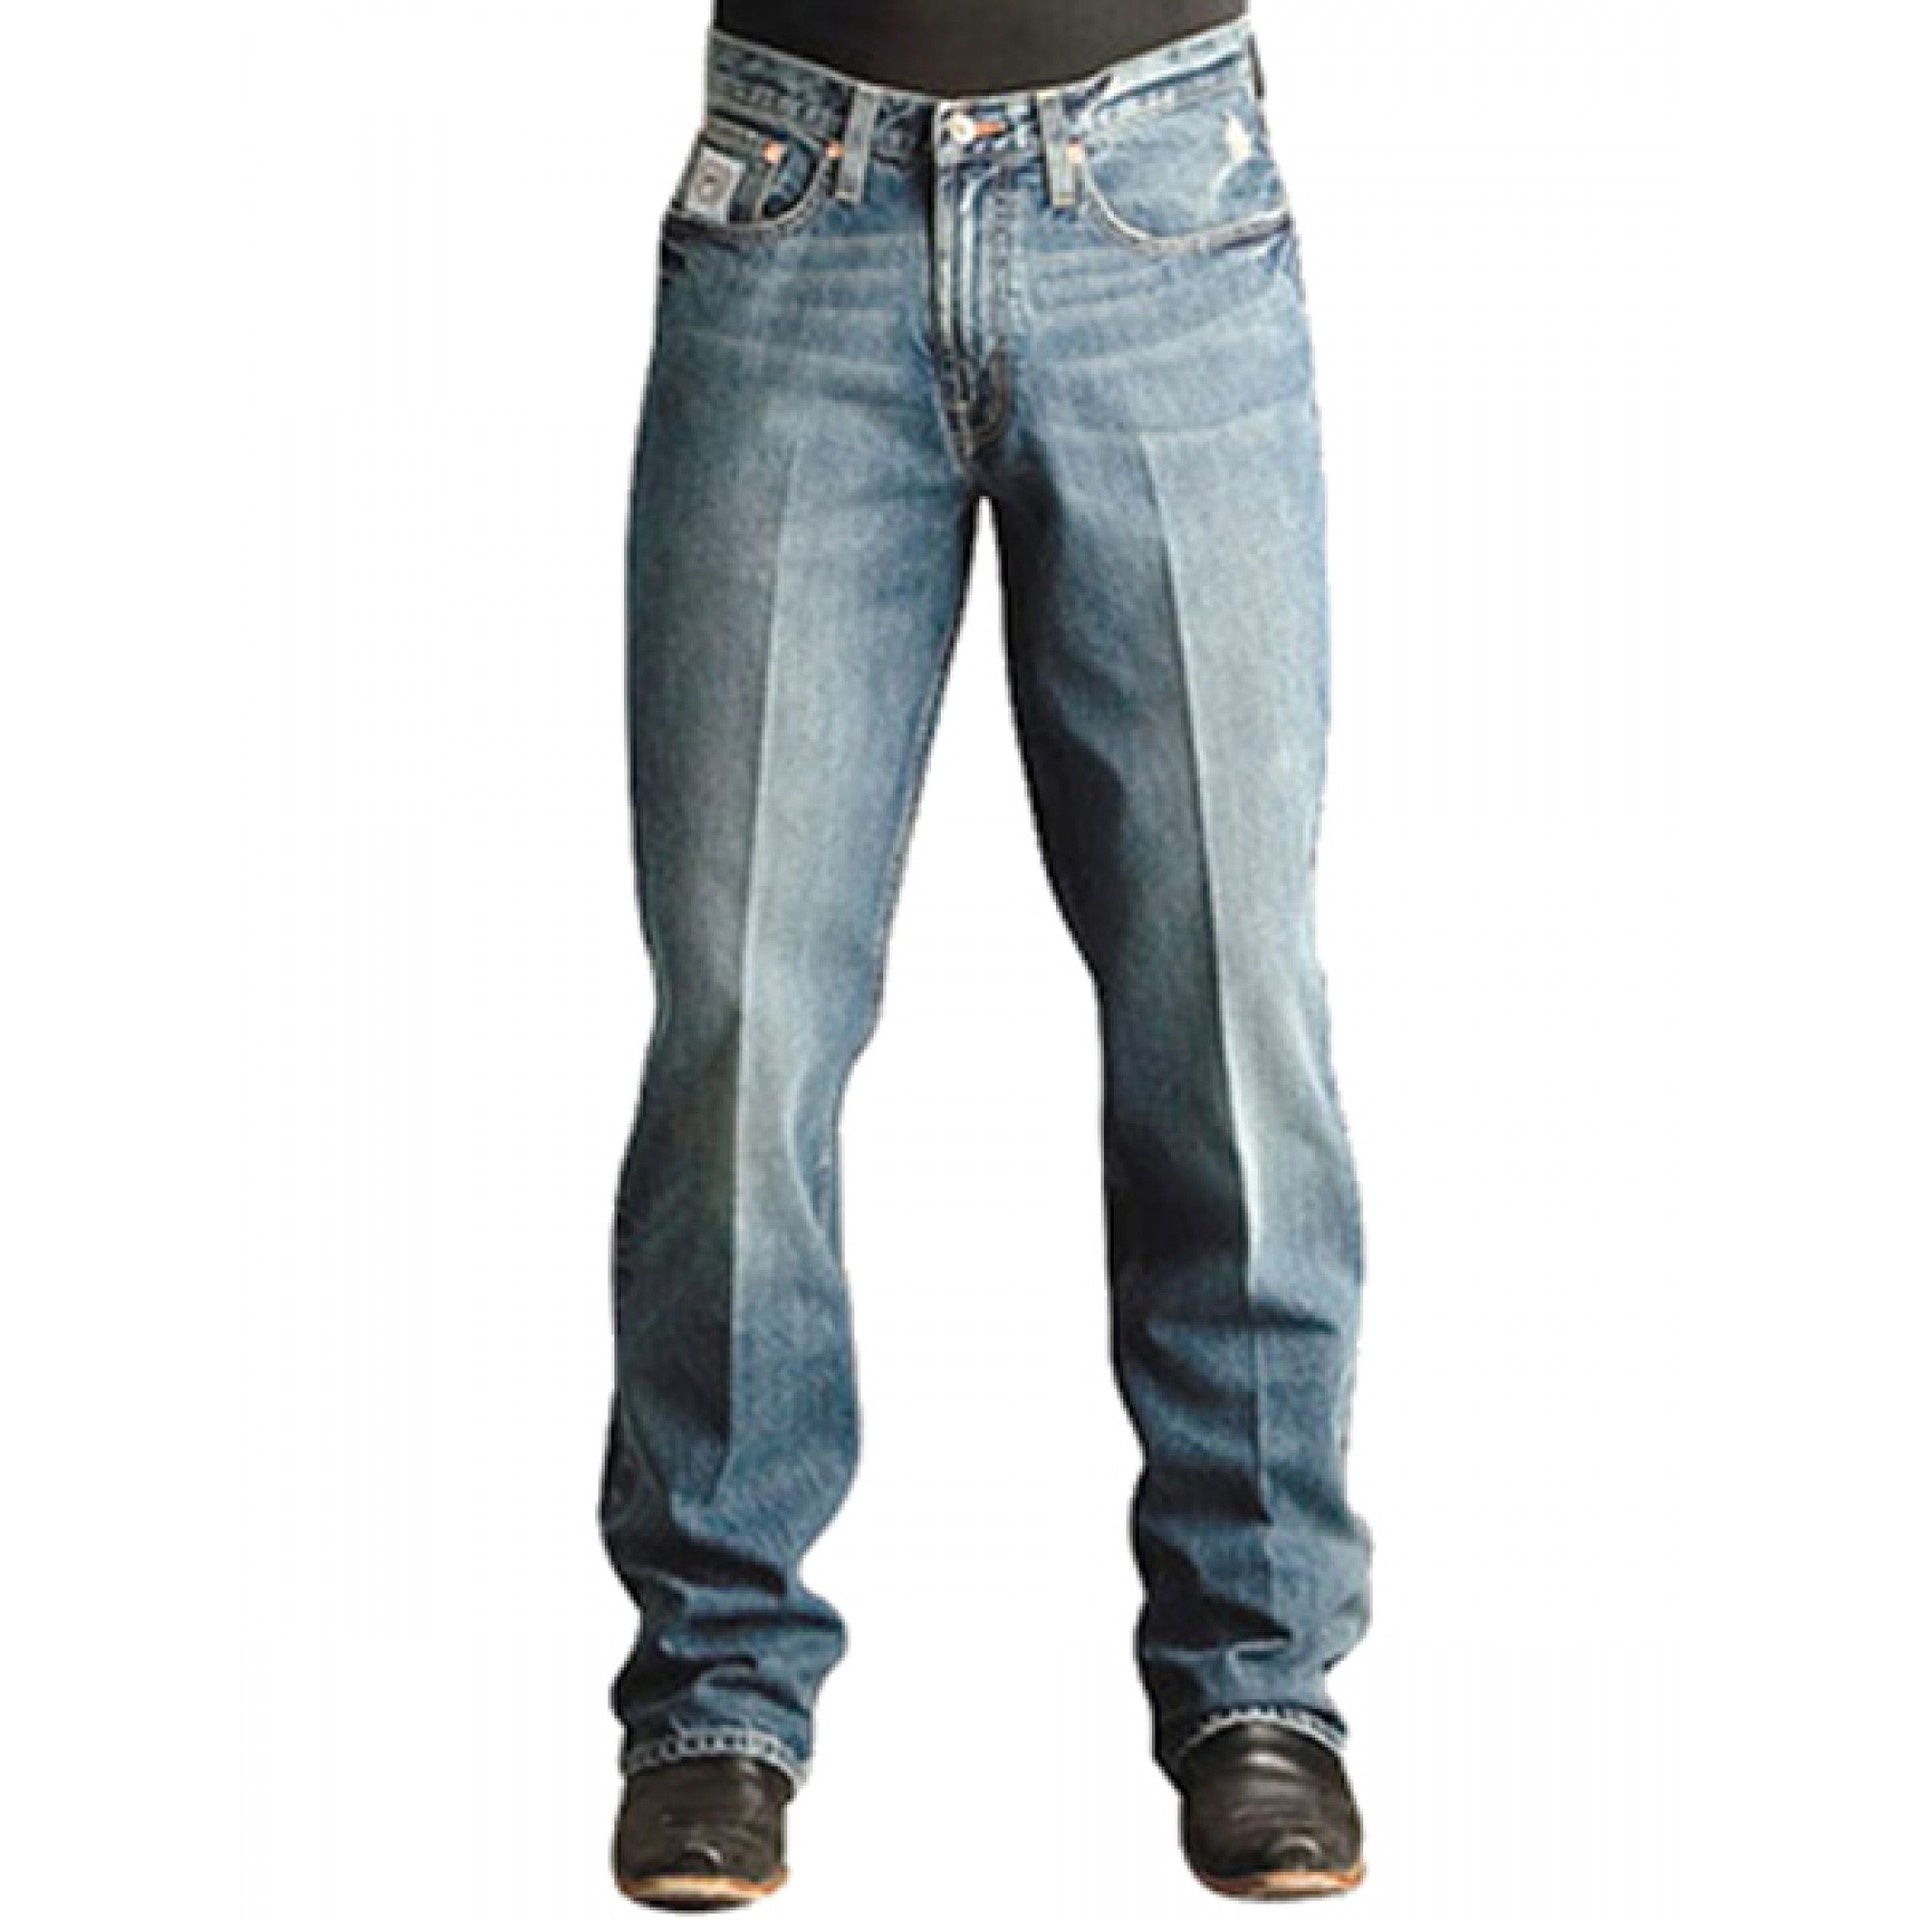 Cinch Men's Jeans 'White Label' Medium Wash MB92834003 | Pakenham Western